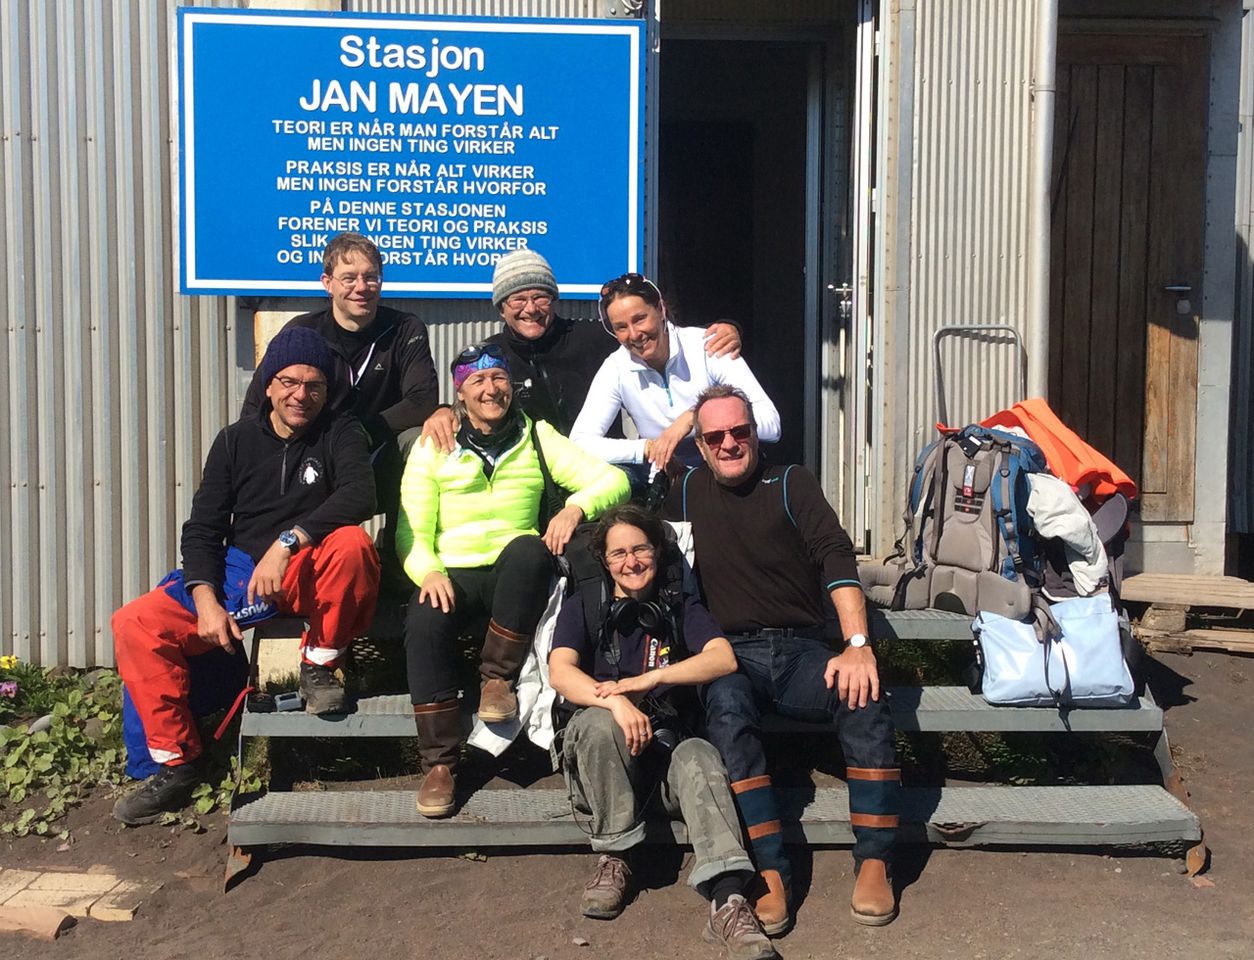 Happy Landing Jan Mayen